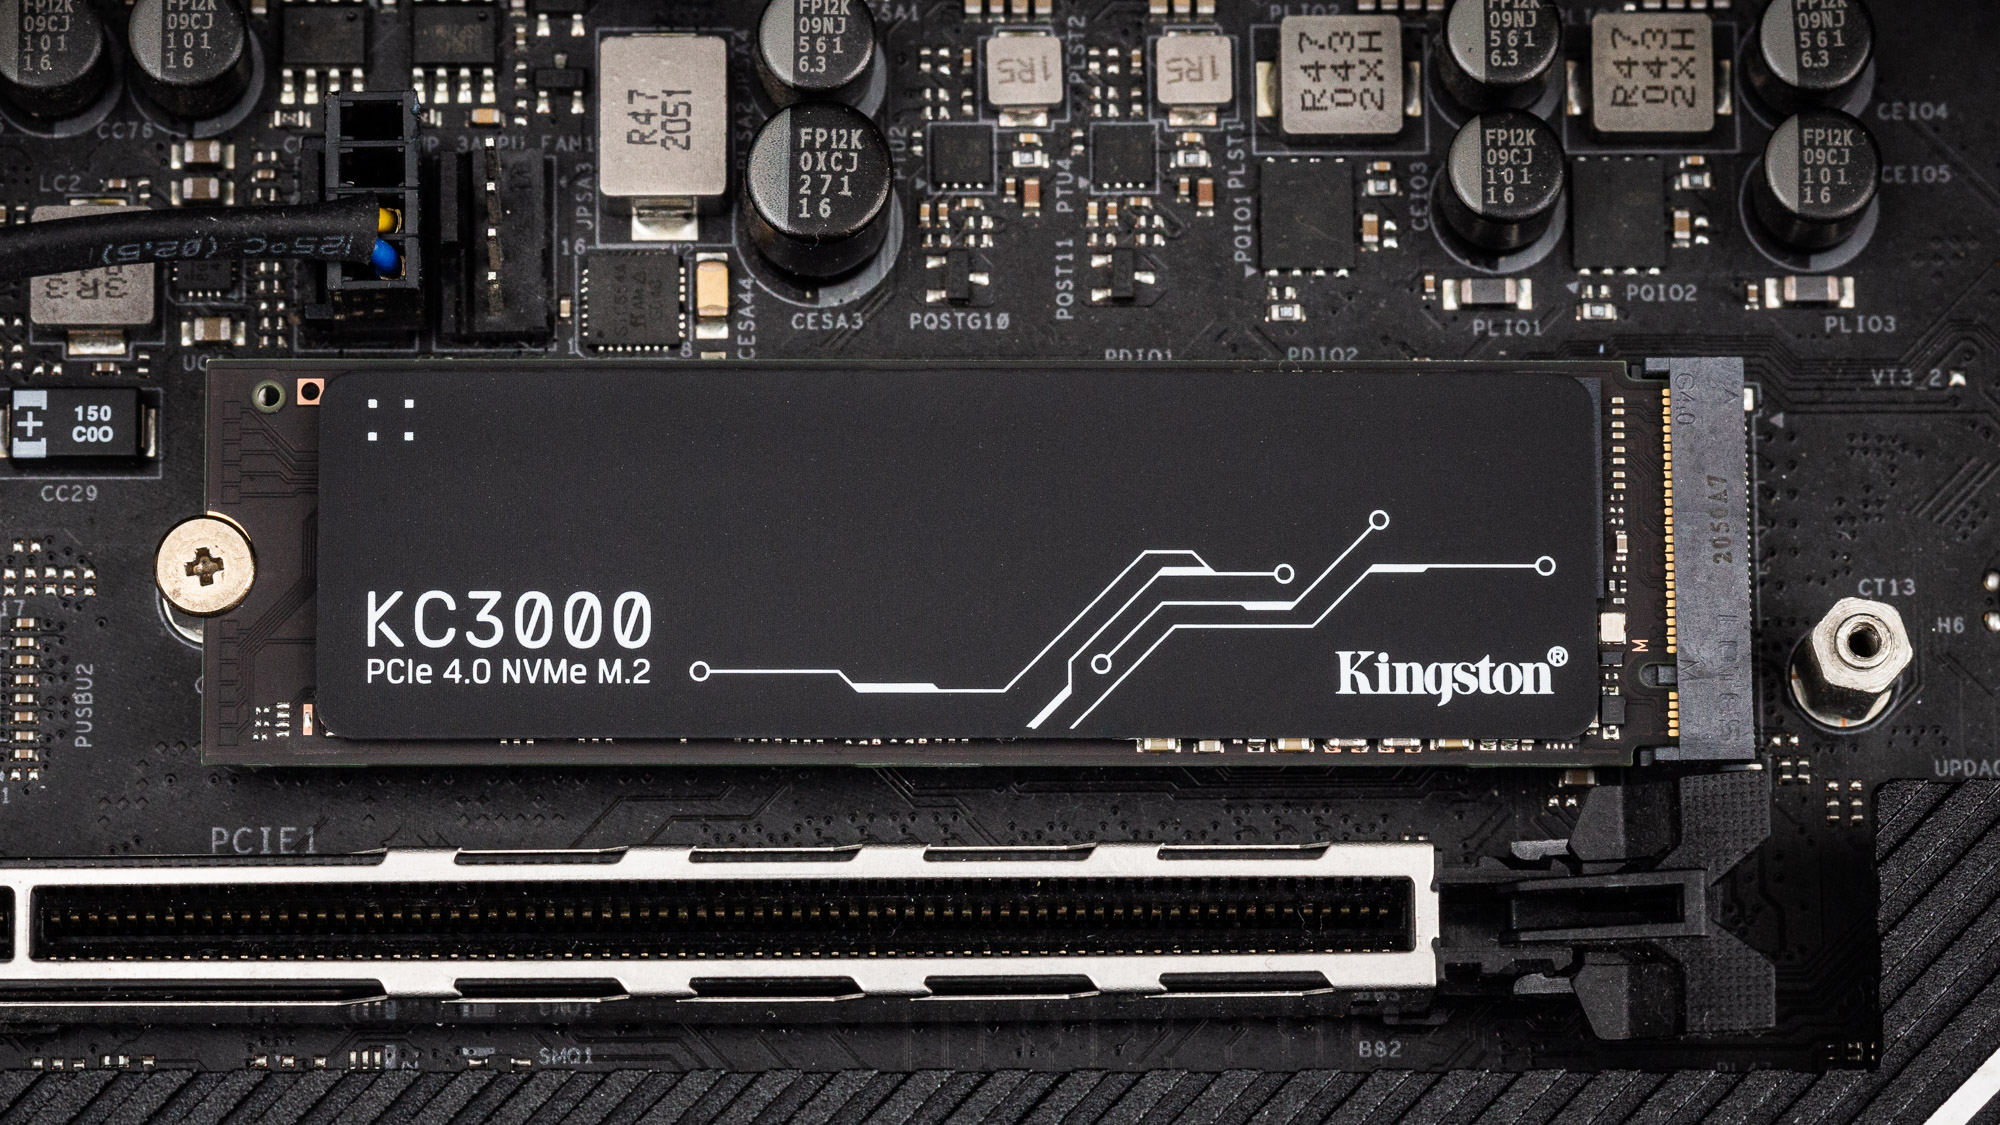 Kingston KC3000 1TB M.2 SSD Review - Blazing fast SSD for modern machines!